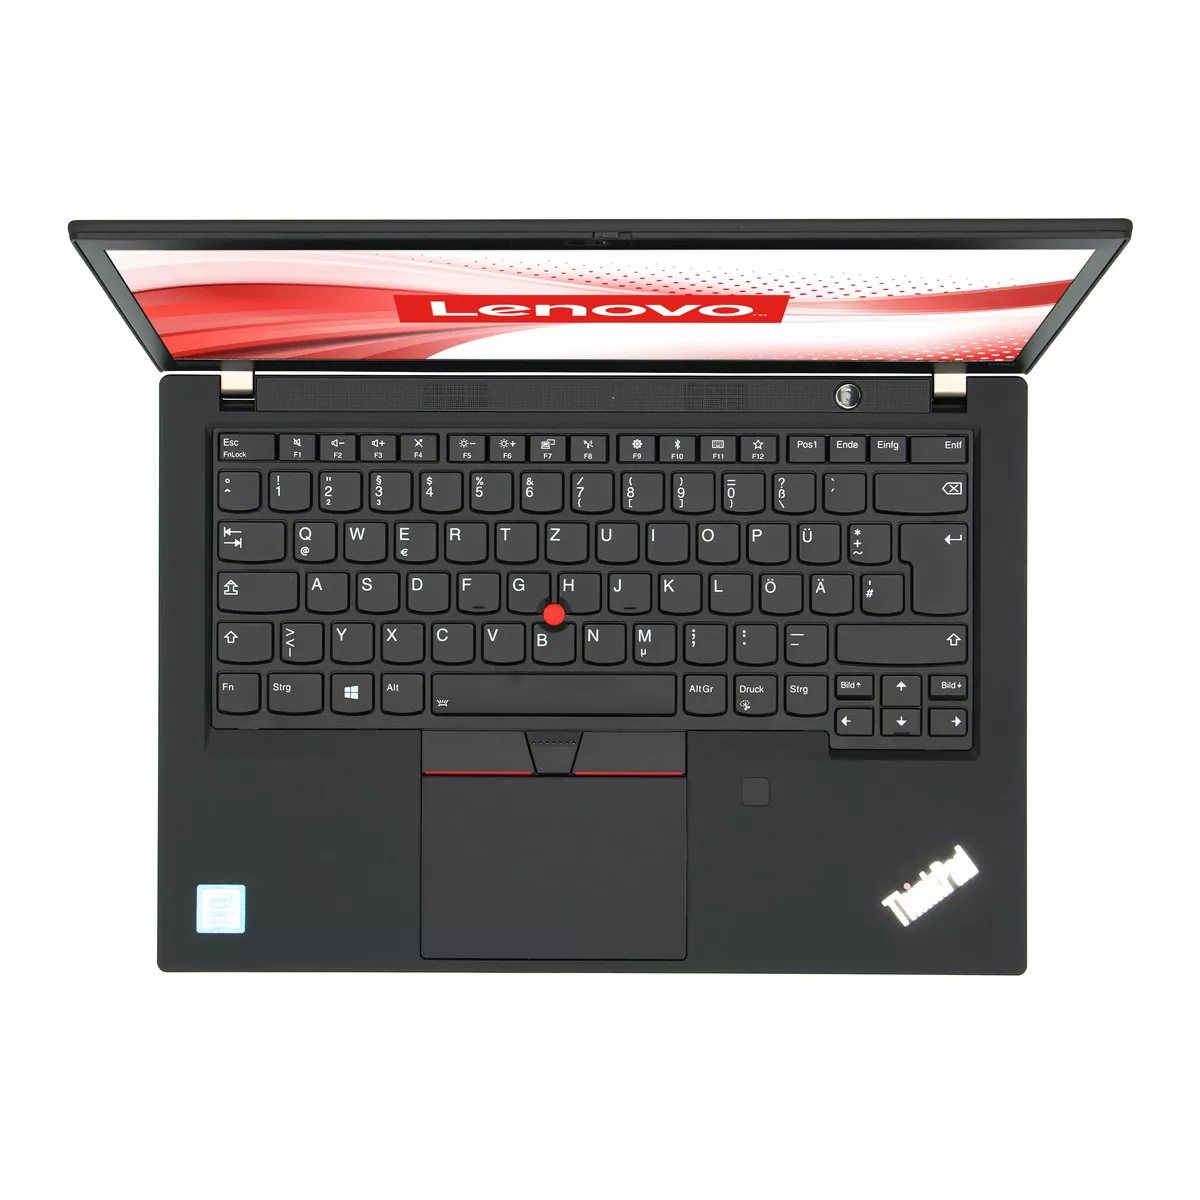 Lenovo ThinkPad T490 Core i7 8665U 16 GB 500 GB M.2 nVME SSD Webcam Touch A+